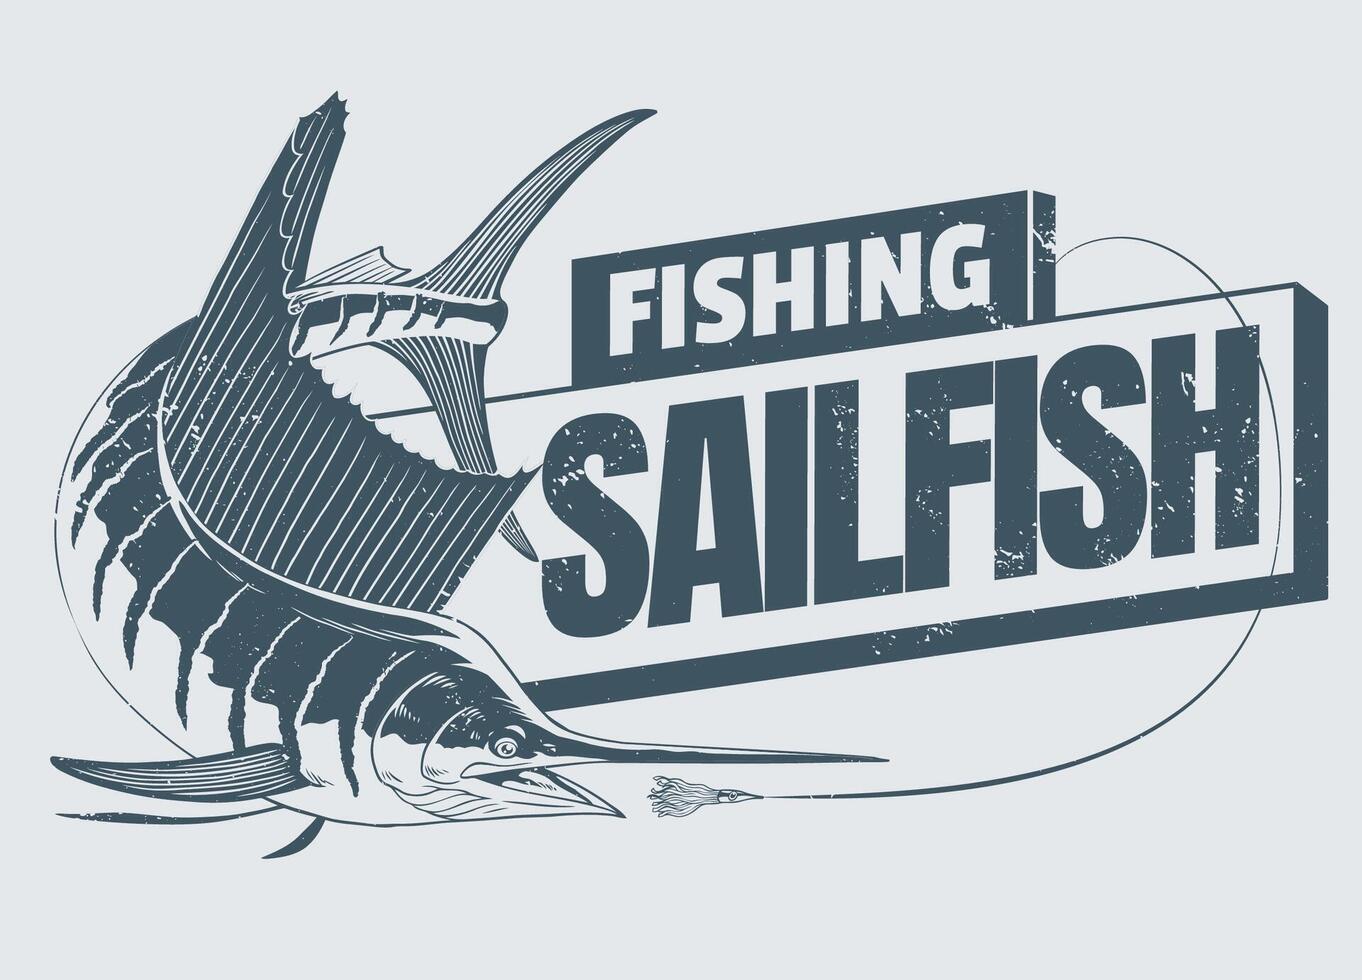 Sailfish Fishing Shirt Design Vintage with Rough Texture vector